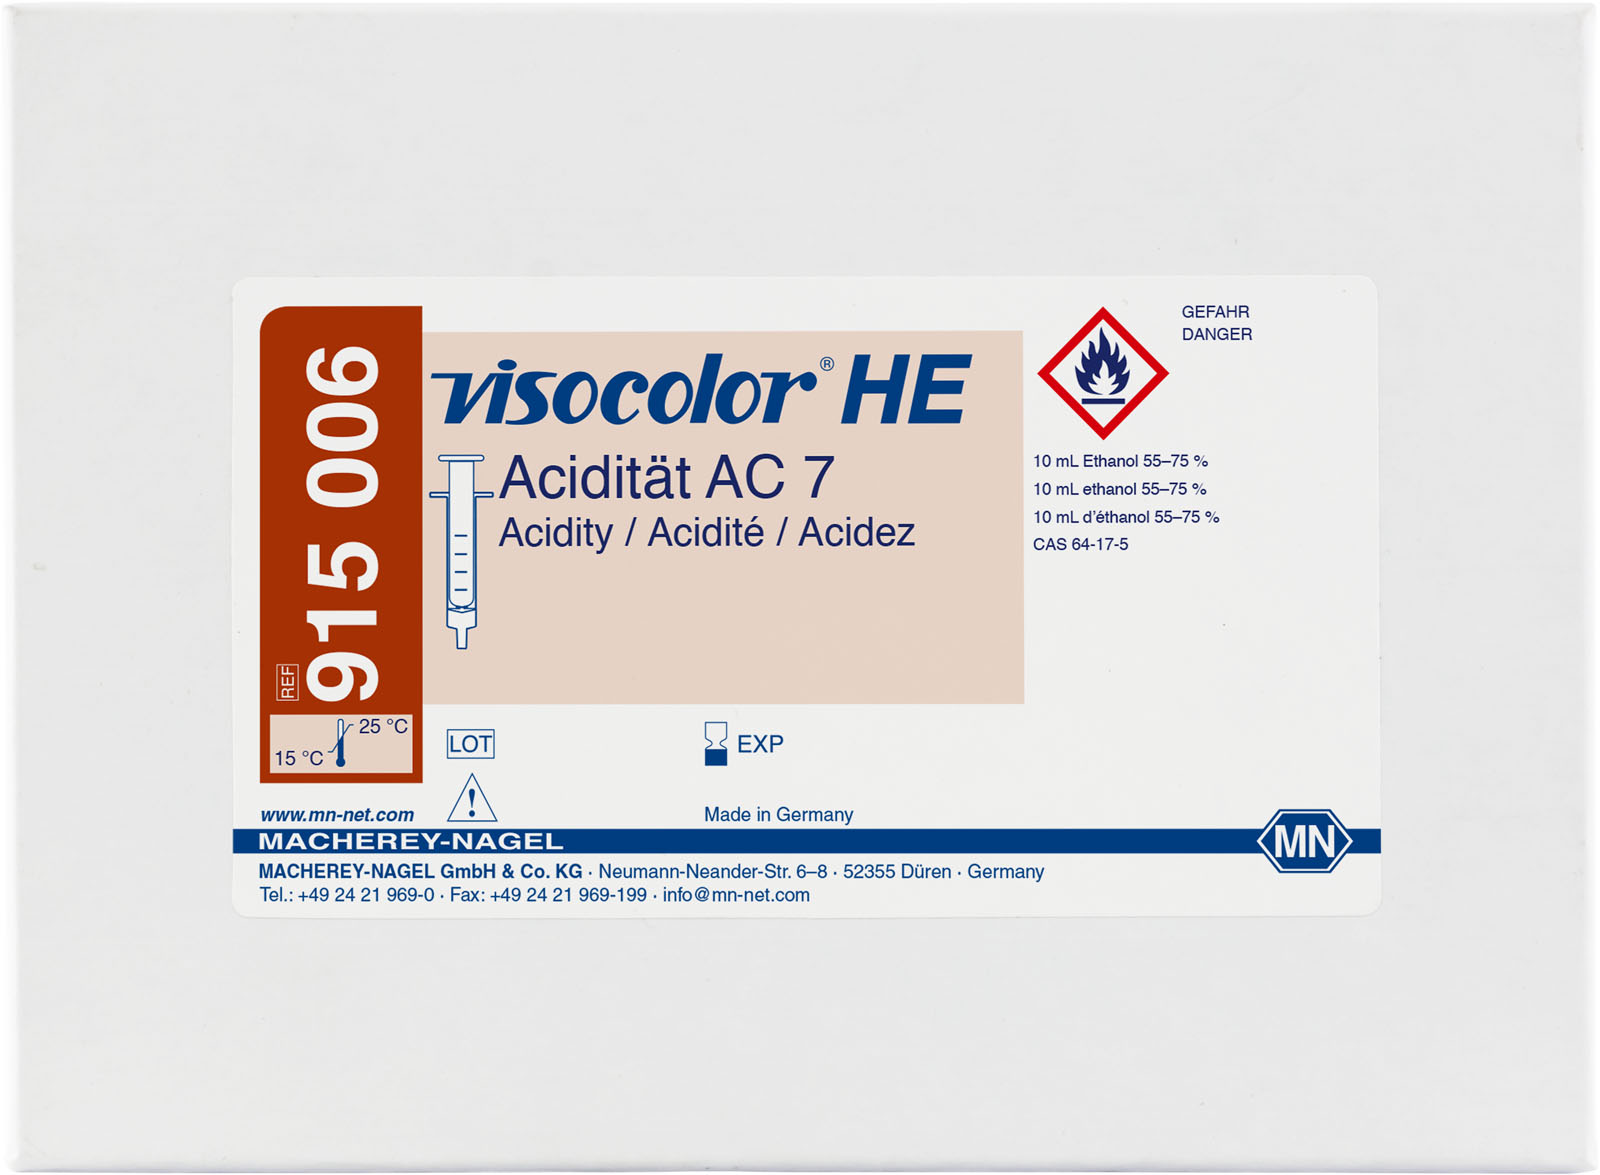 VISOCOLOR® HE Acidity Test Kit